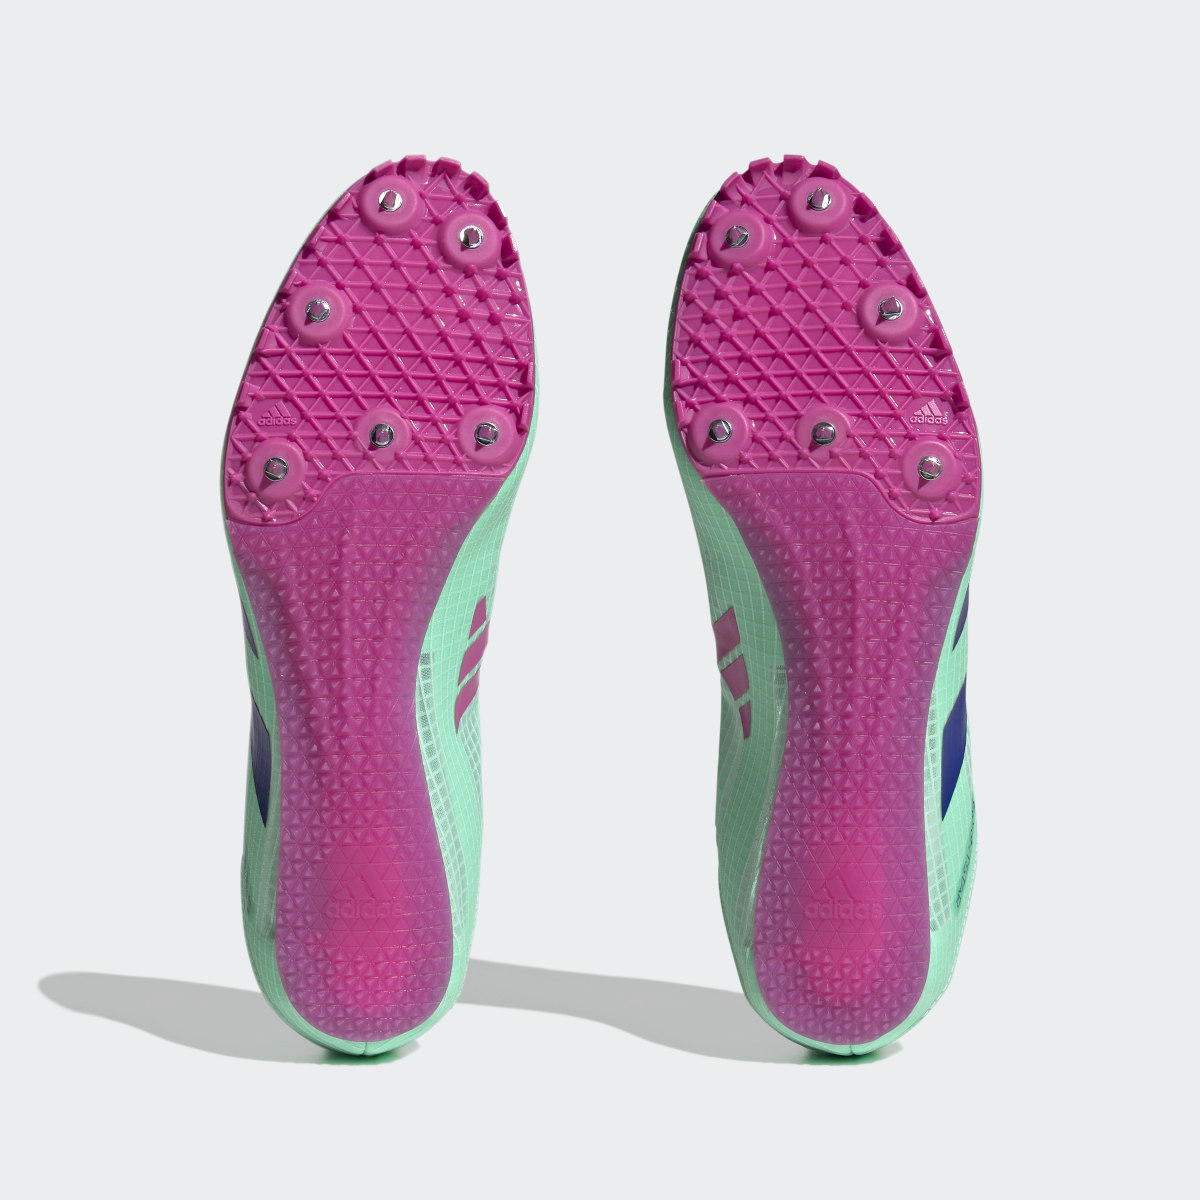 Adidas Sprintstar Shoes. 4